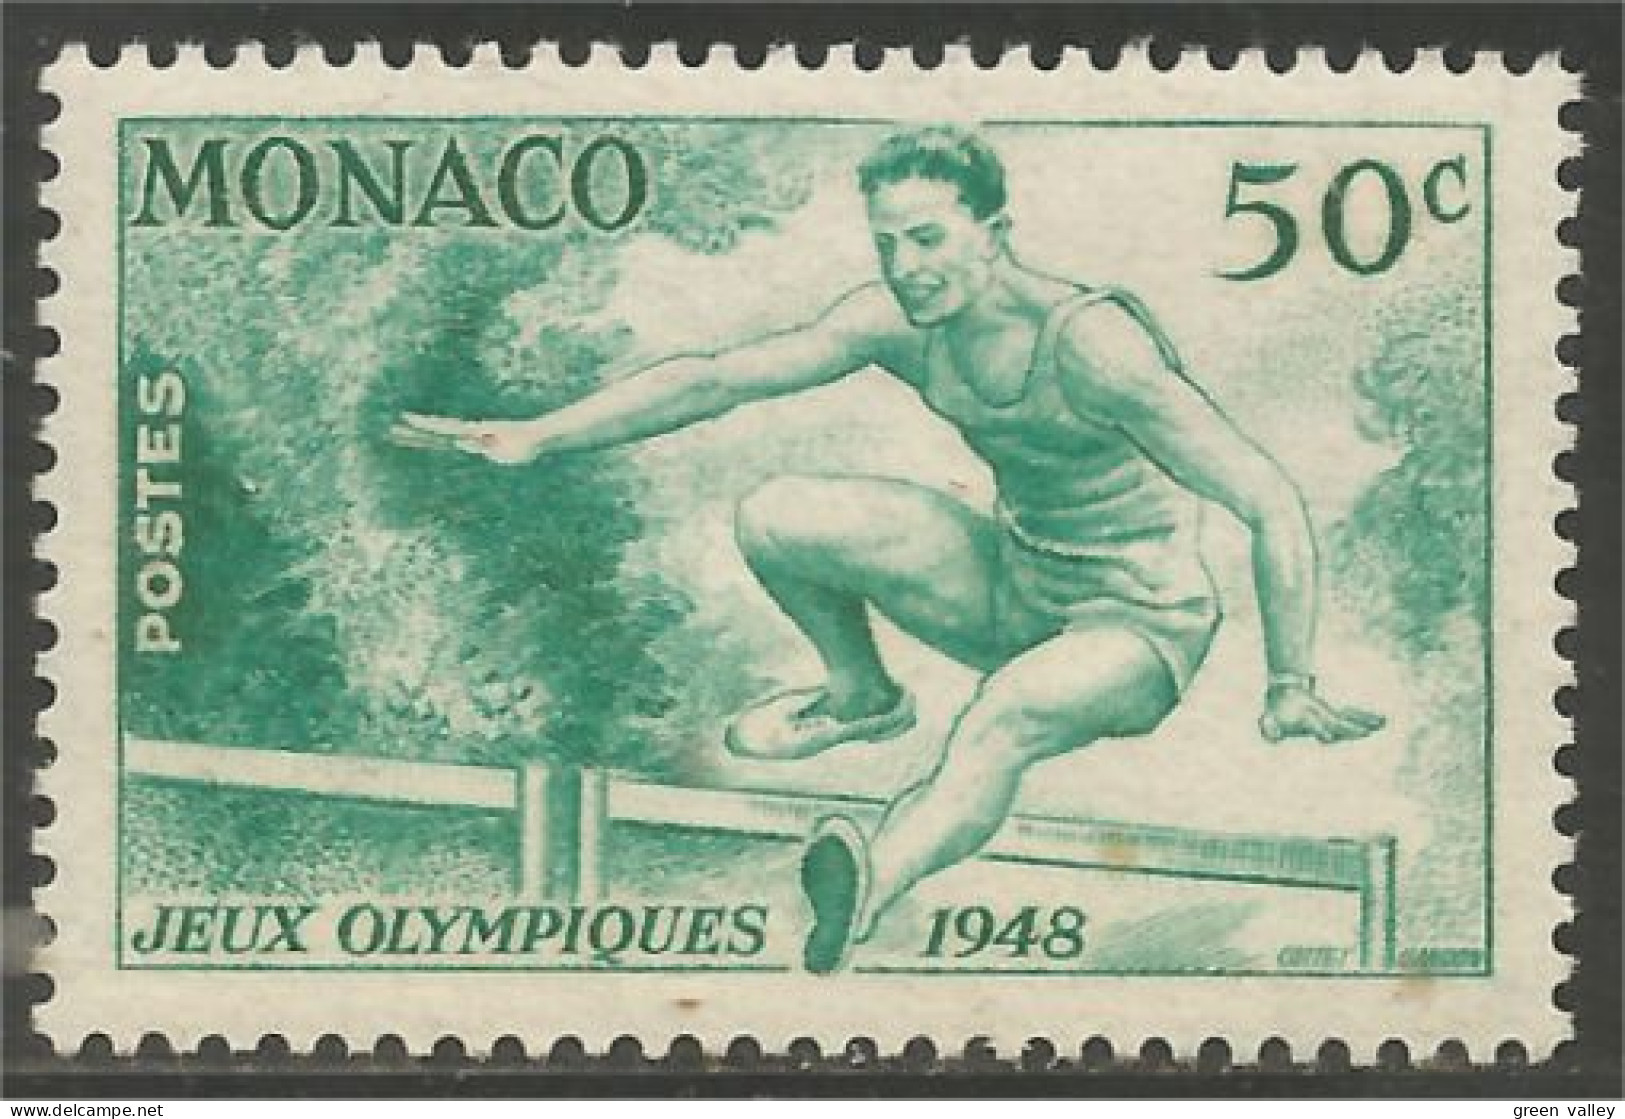 630 Monaco 1948 Yv 319 Athlétisme Course Haies Hurdles Running MH * Neuf (MON-240b) - Ete 1948: Londres